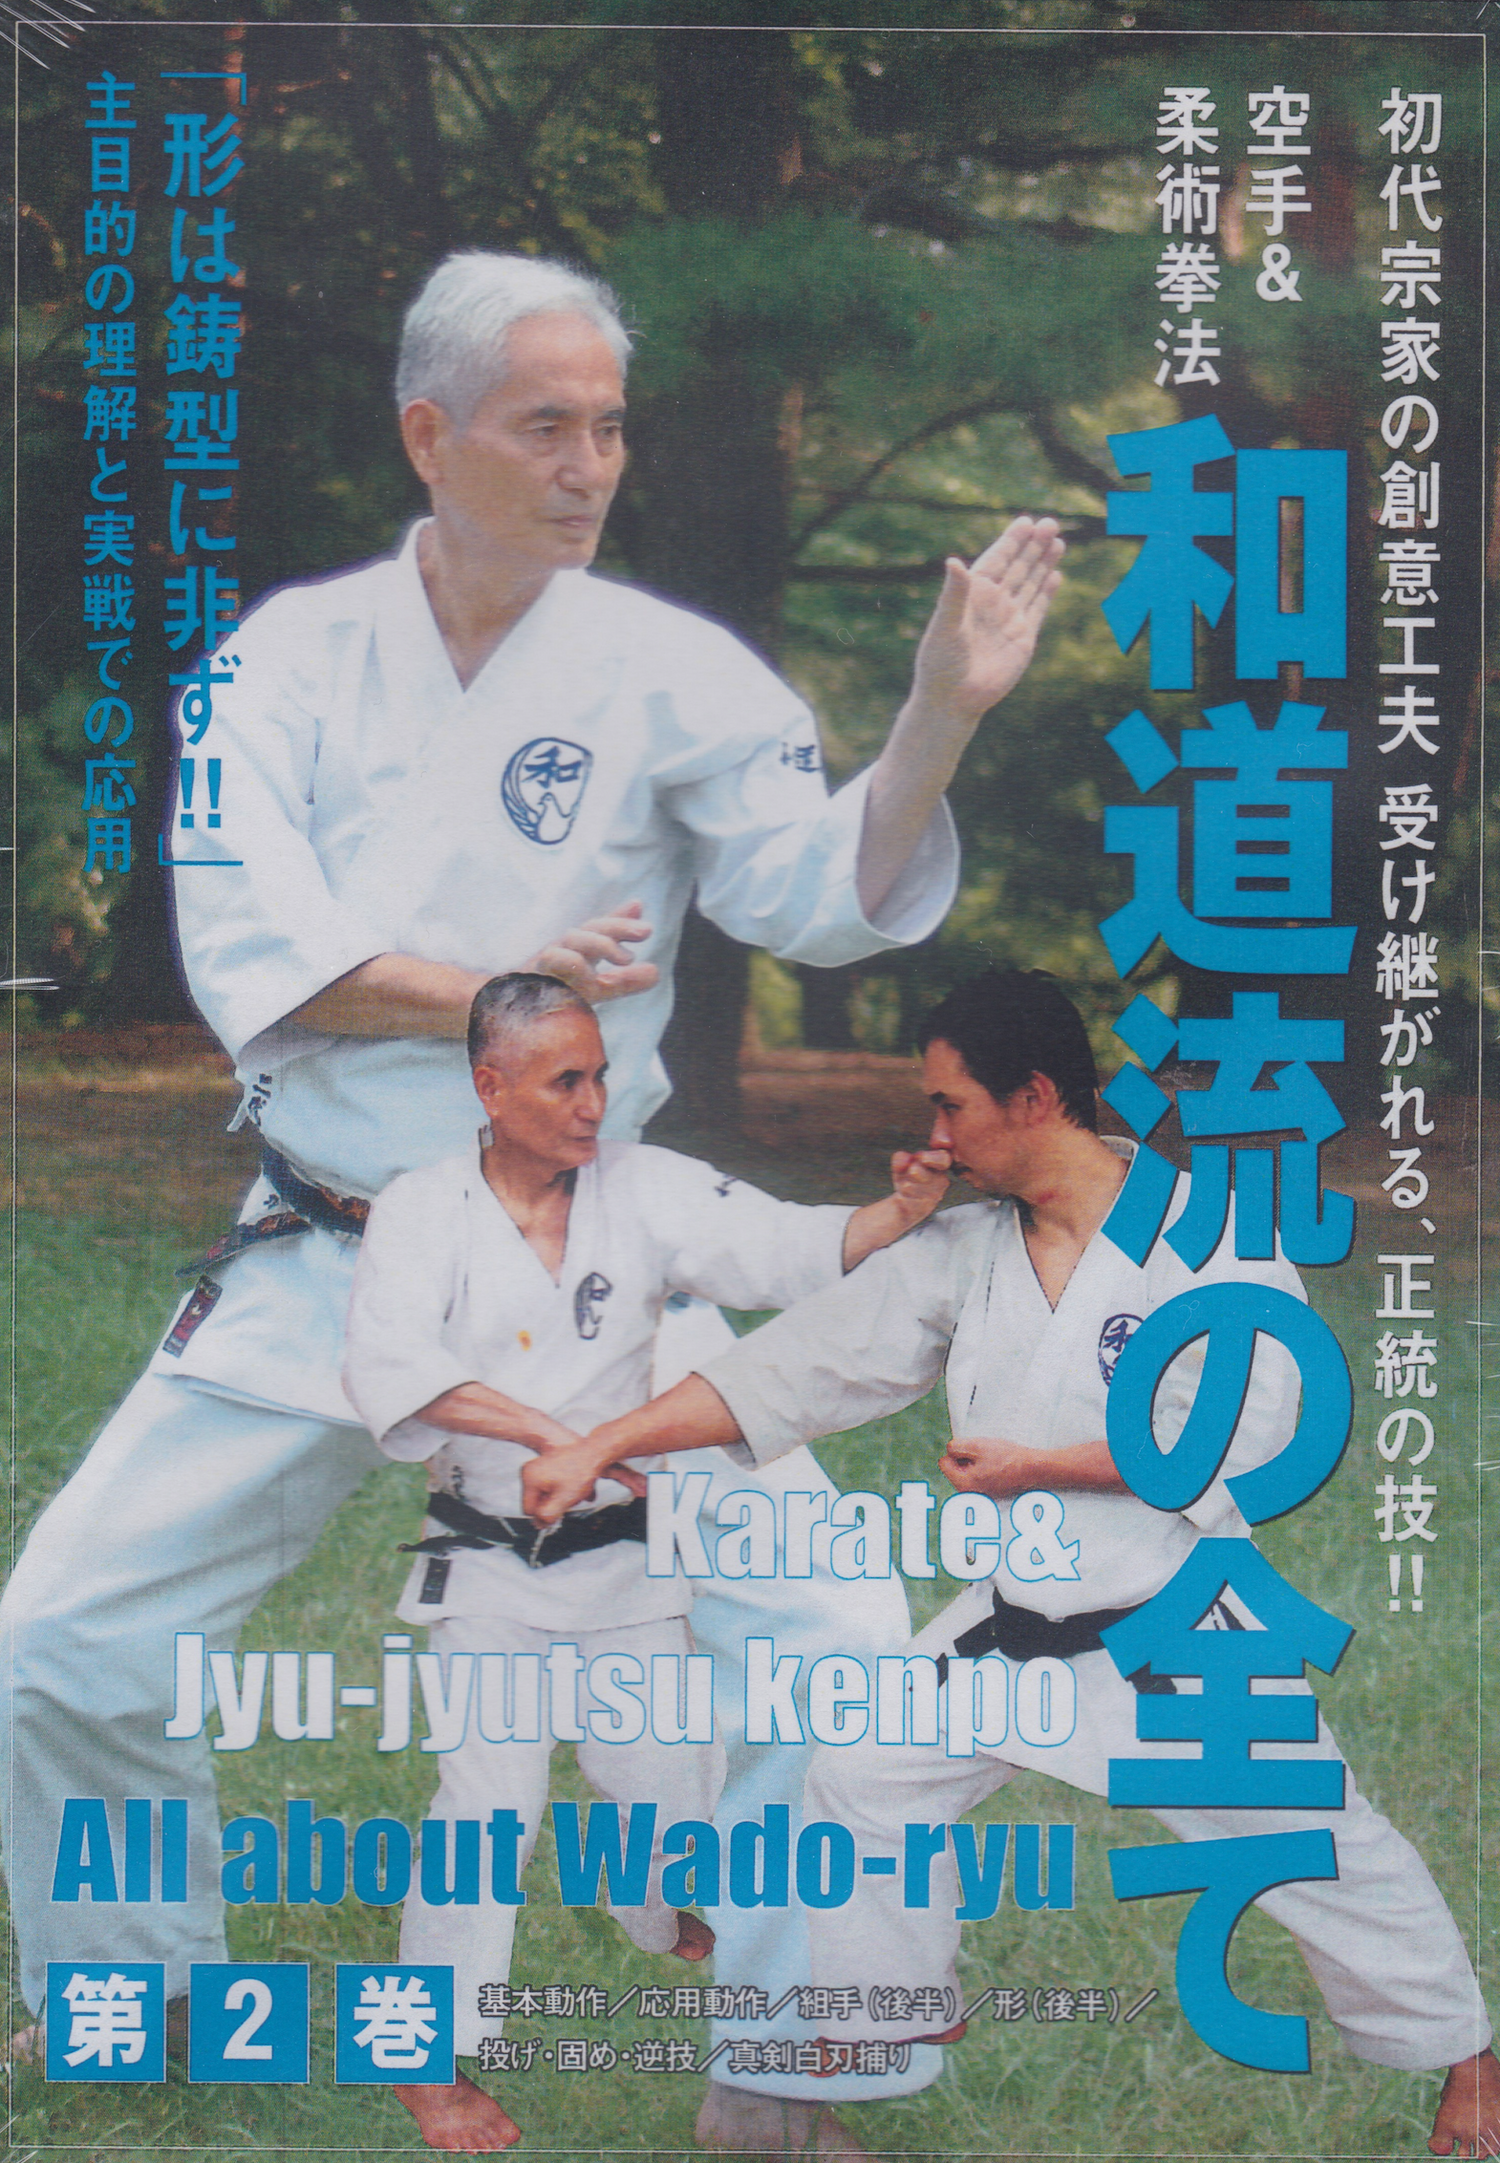 オール和道流 DVD 2: 空手と柔術拳法 by 大塚次郎